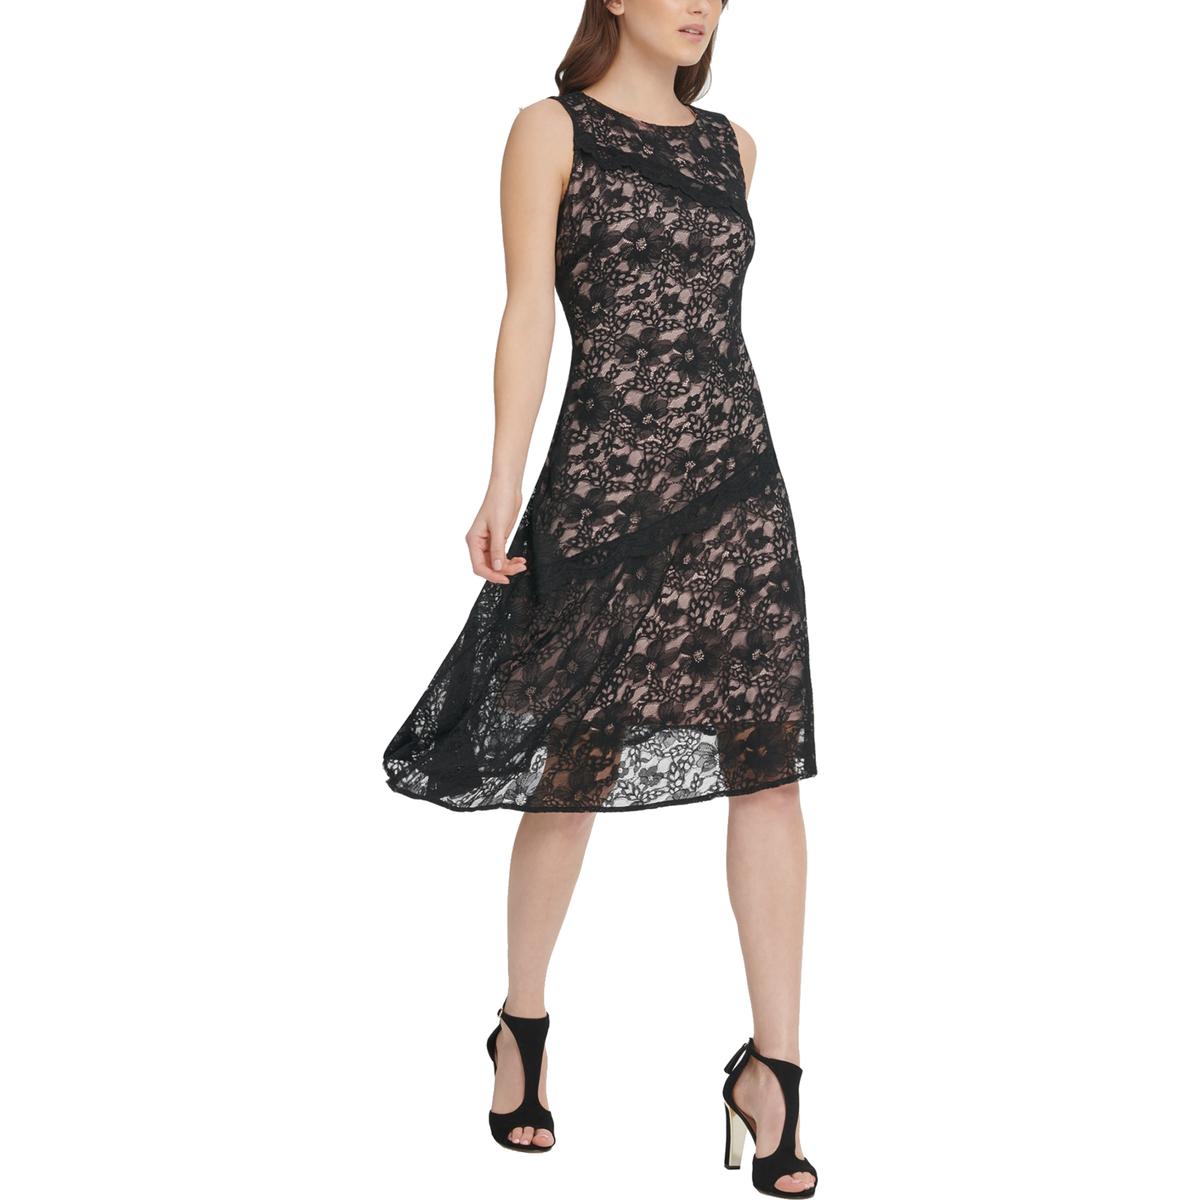 DKNY Womens Black Lace Asymmetric Party Cocktail Dress 10 BHFO 8500 | eBay